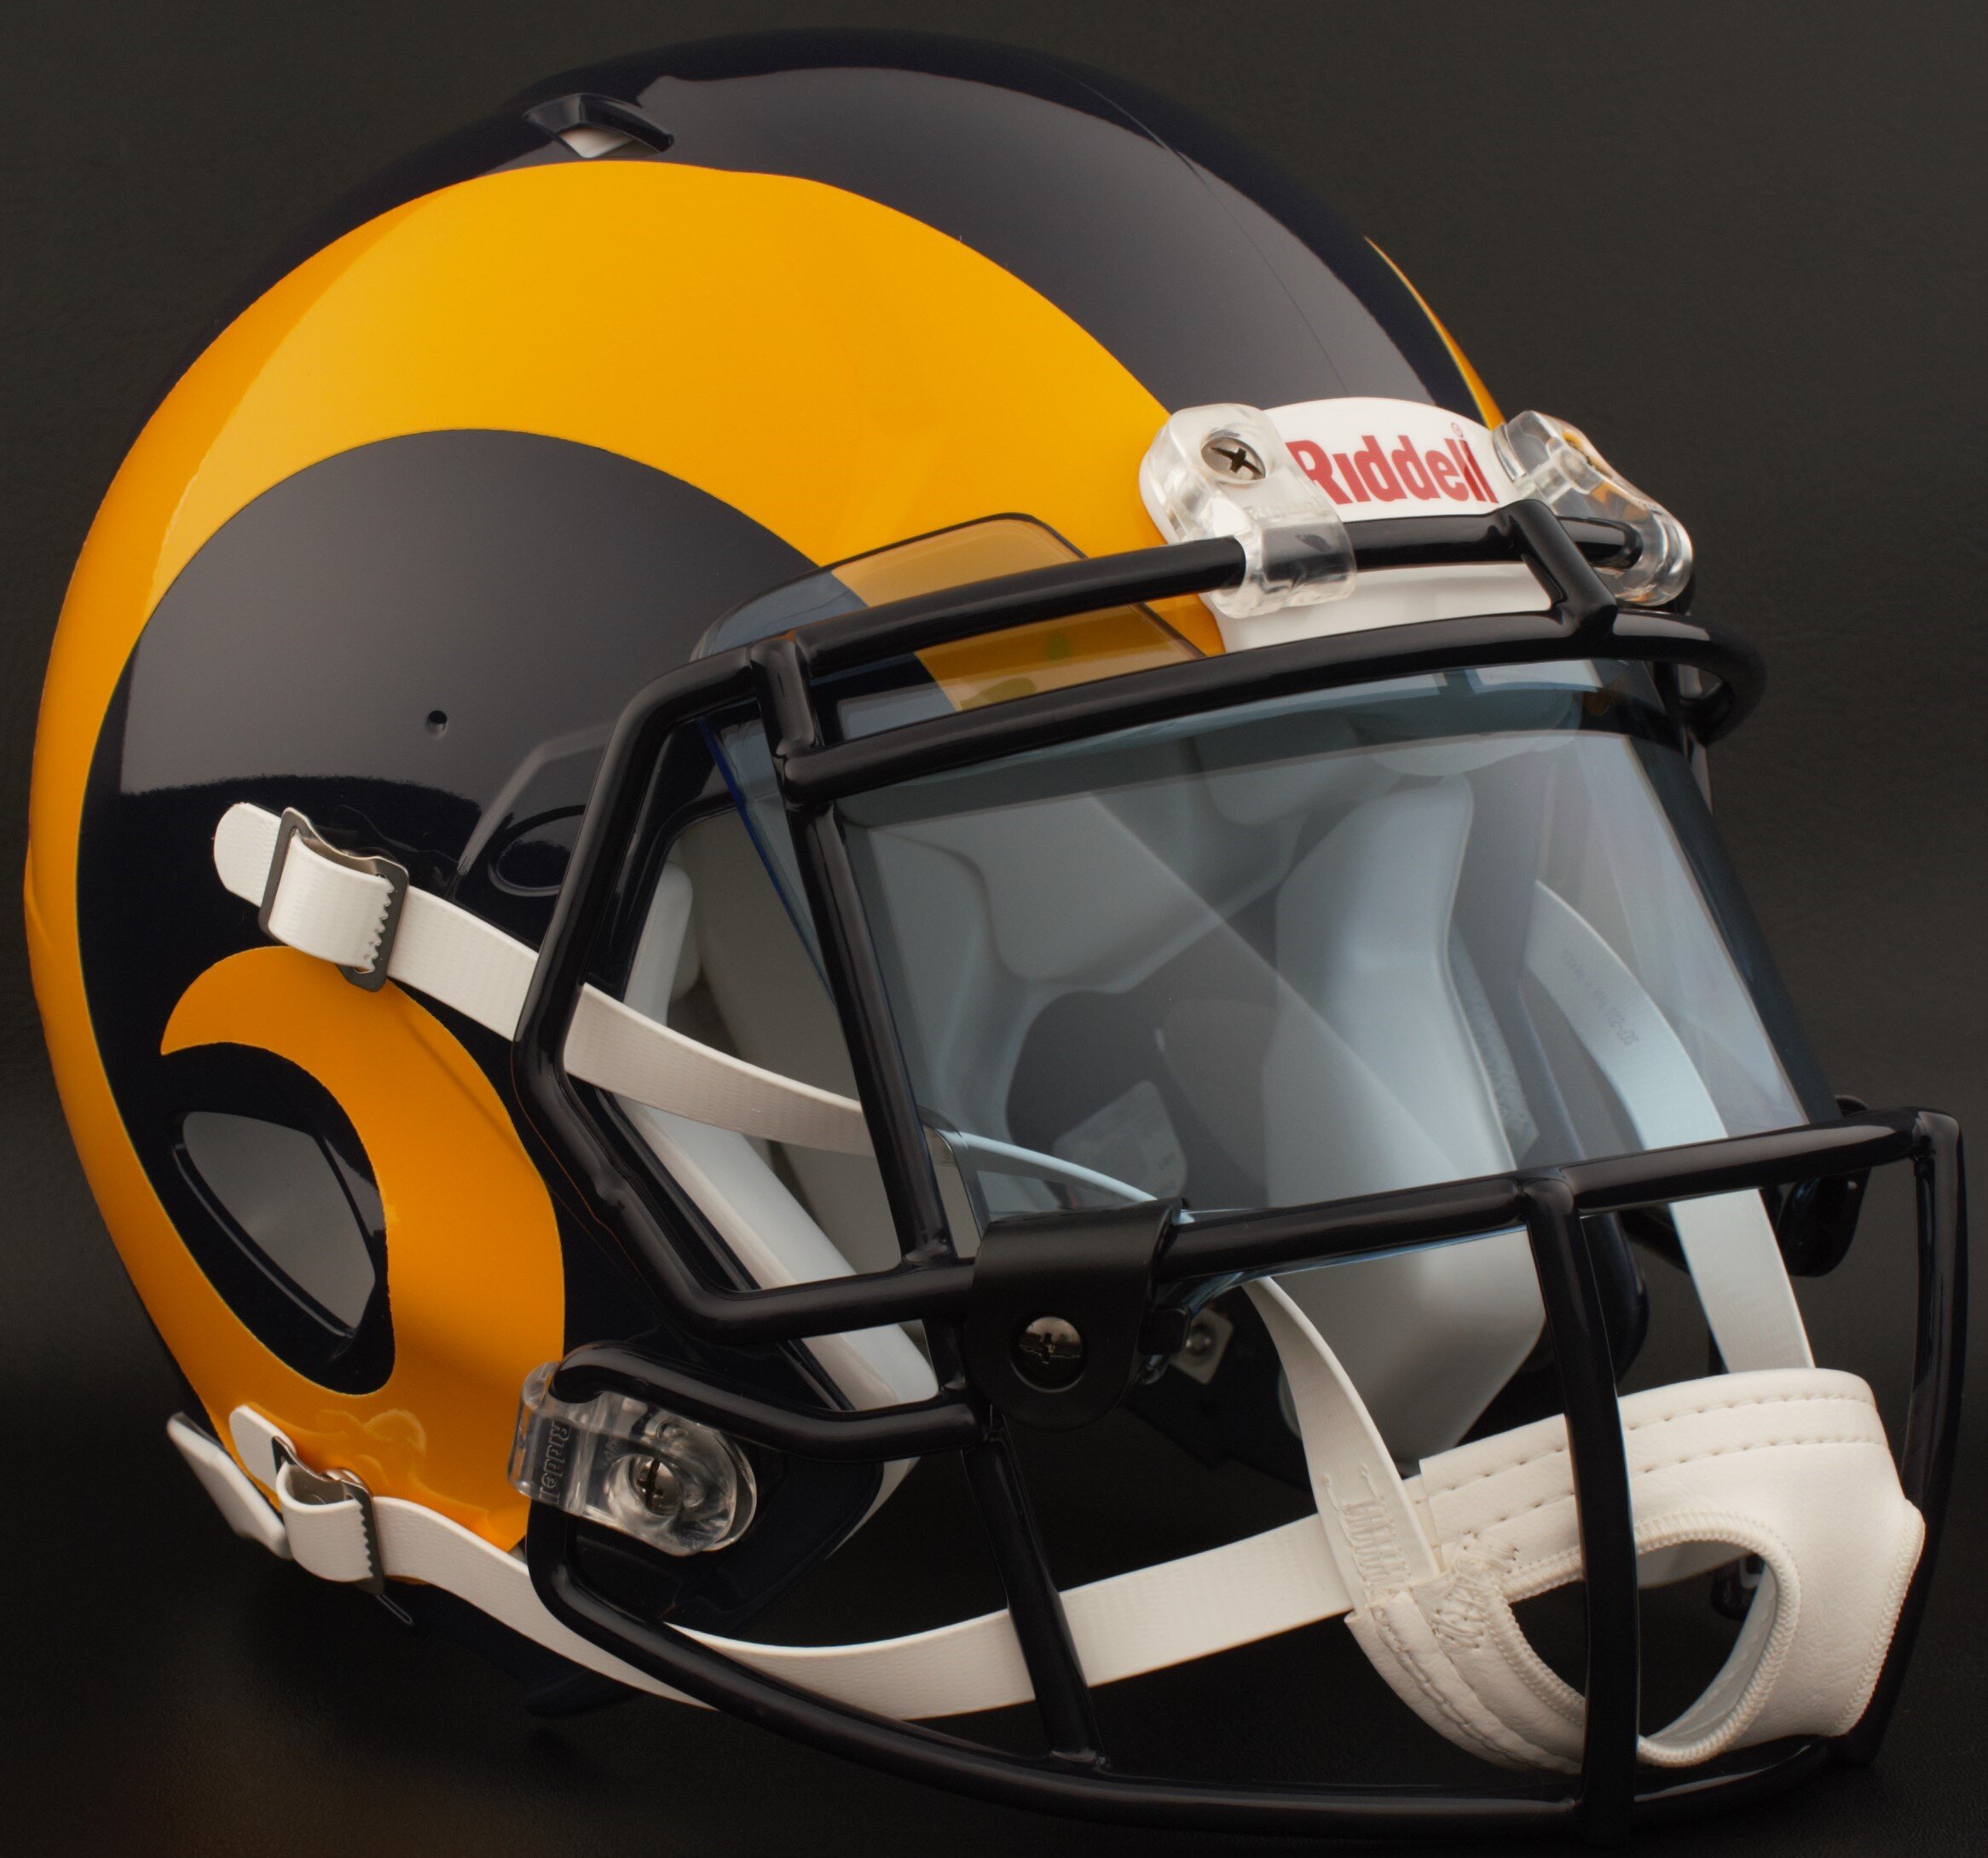 GRAY BUFFALO BILLS Riddell Speed S3BDU Football Helmet Facemask/Faceguard 